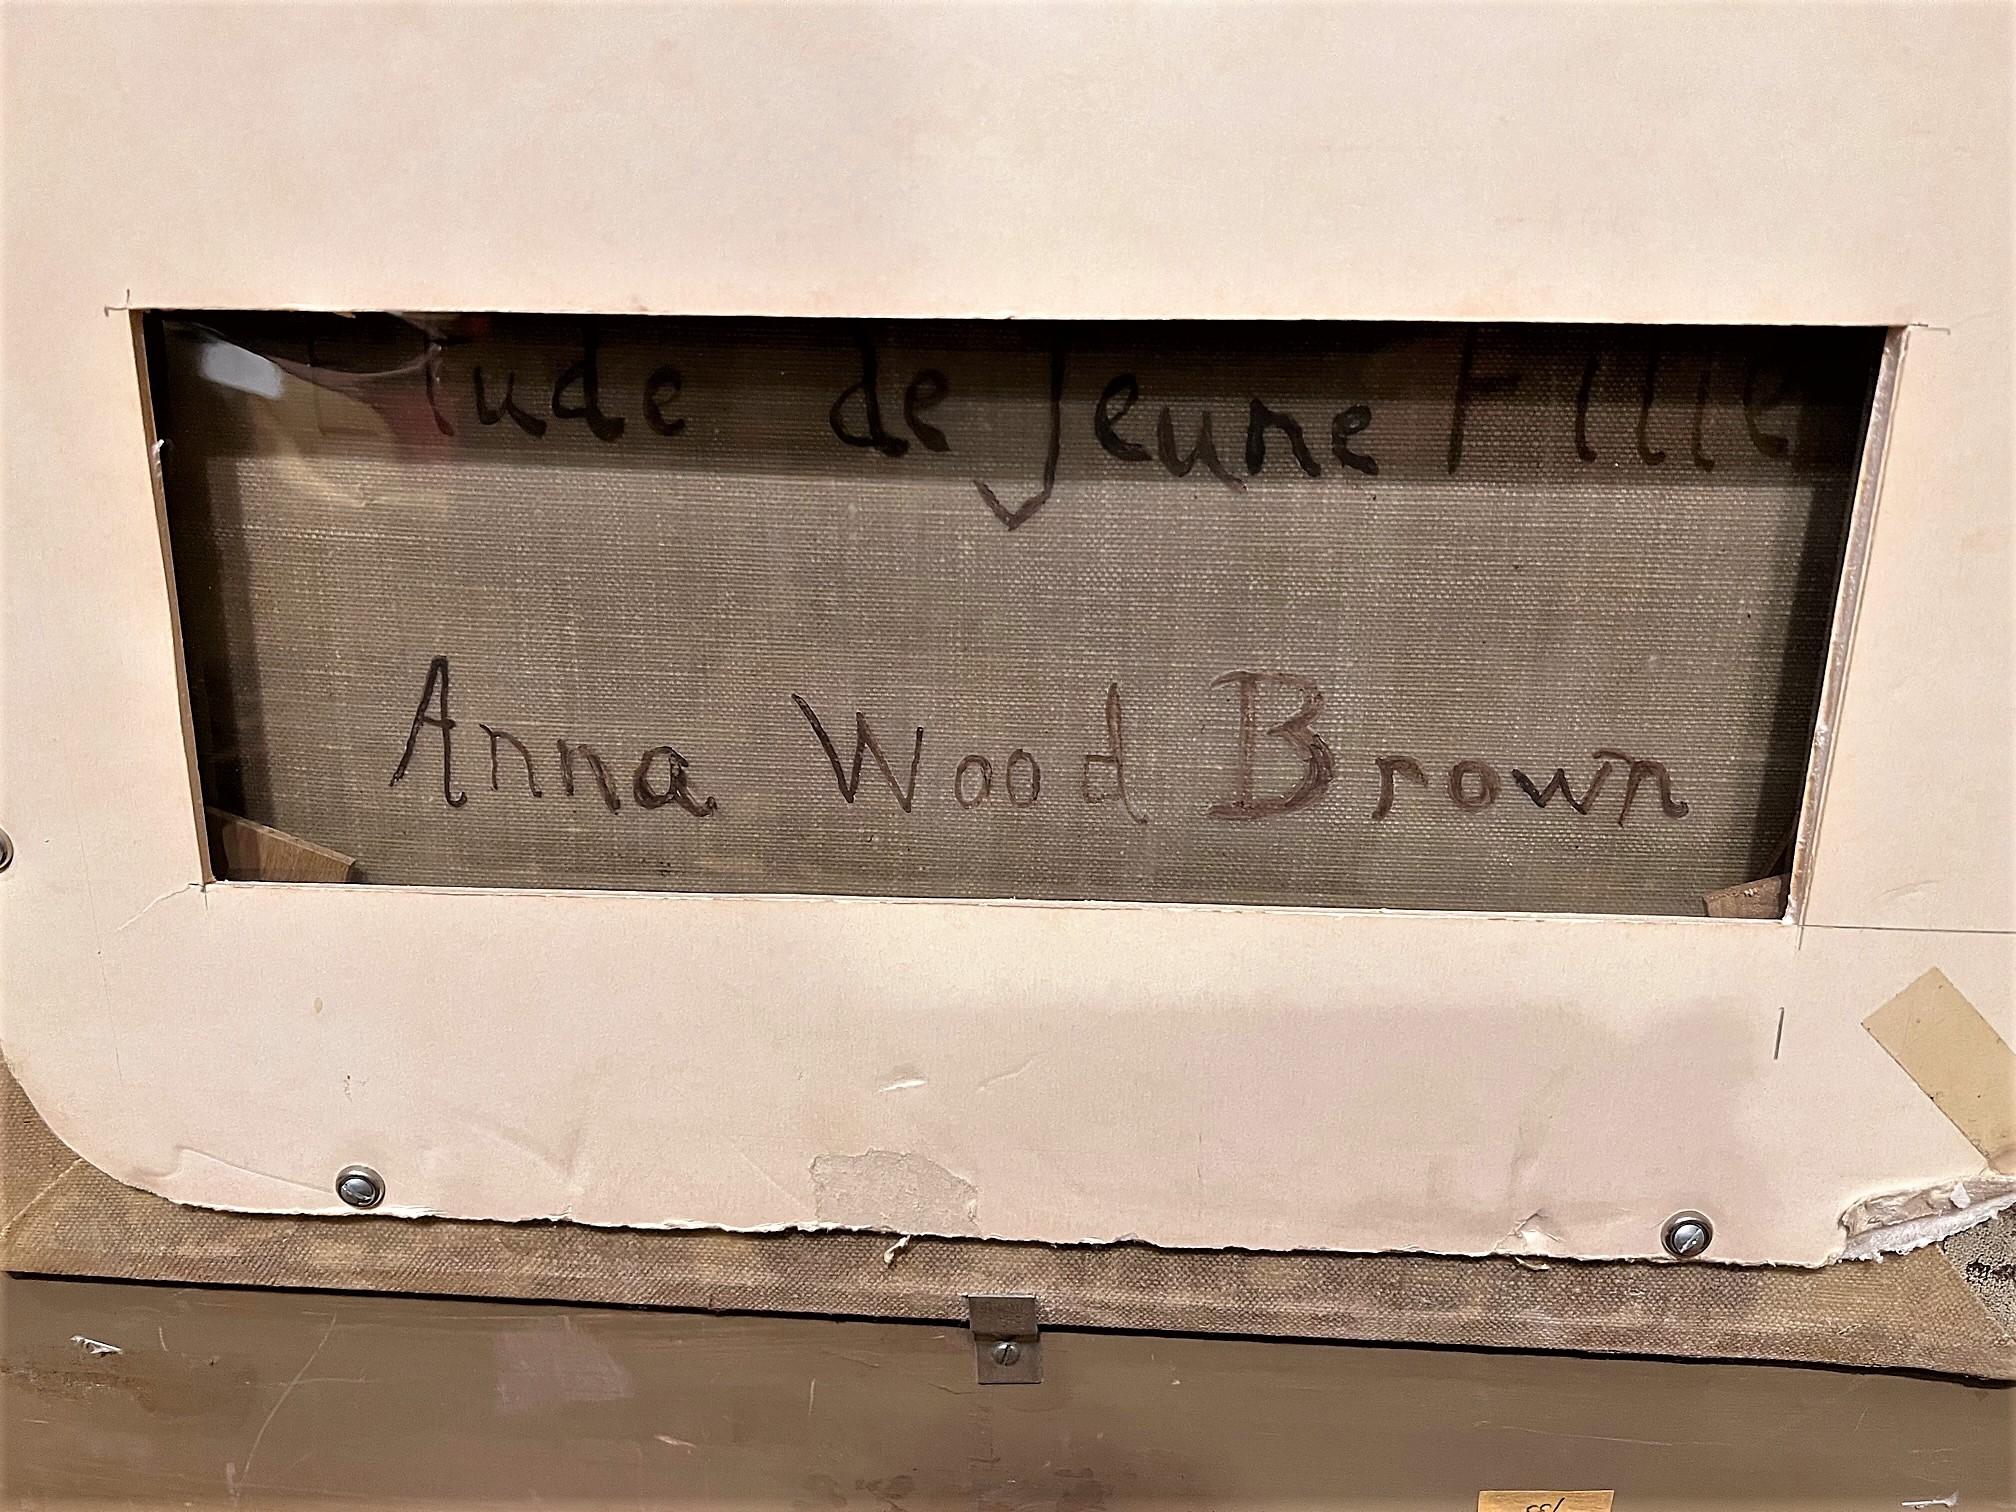 ANNA WOOD BROWN (1863-1920). 